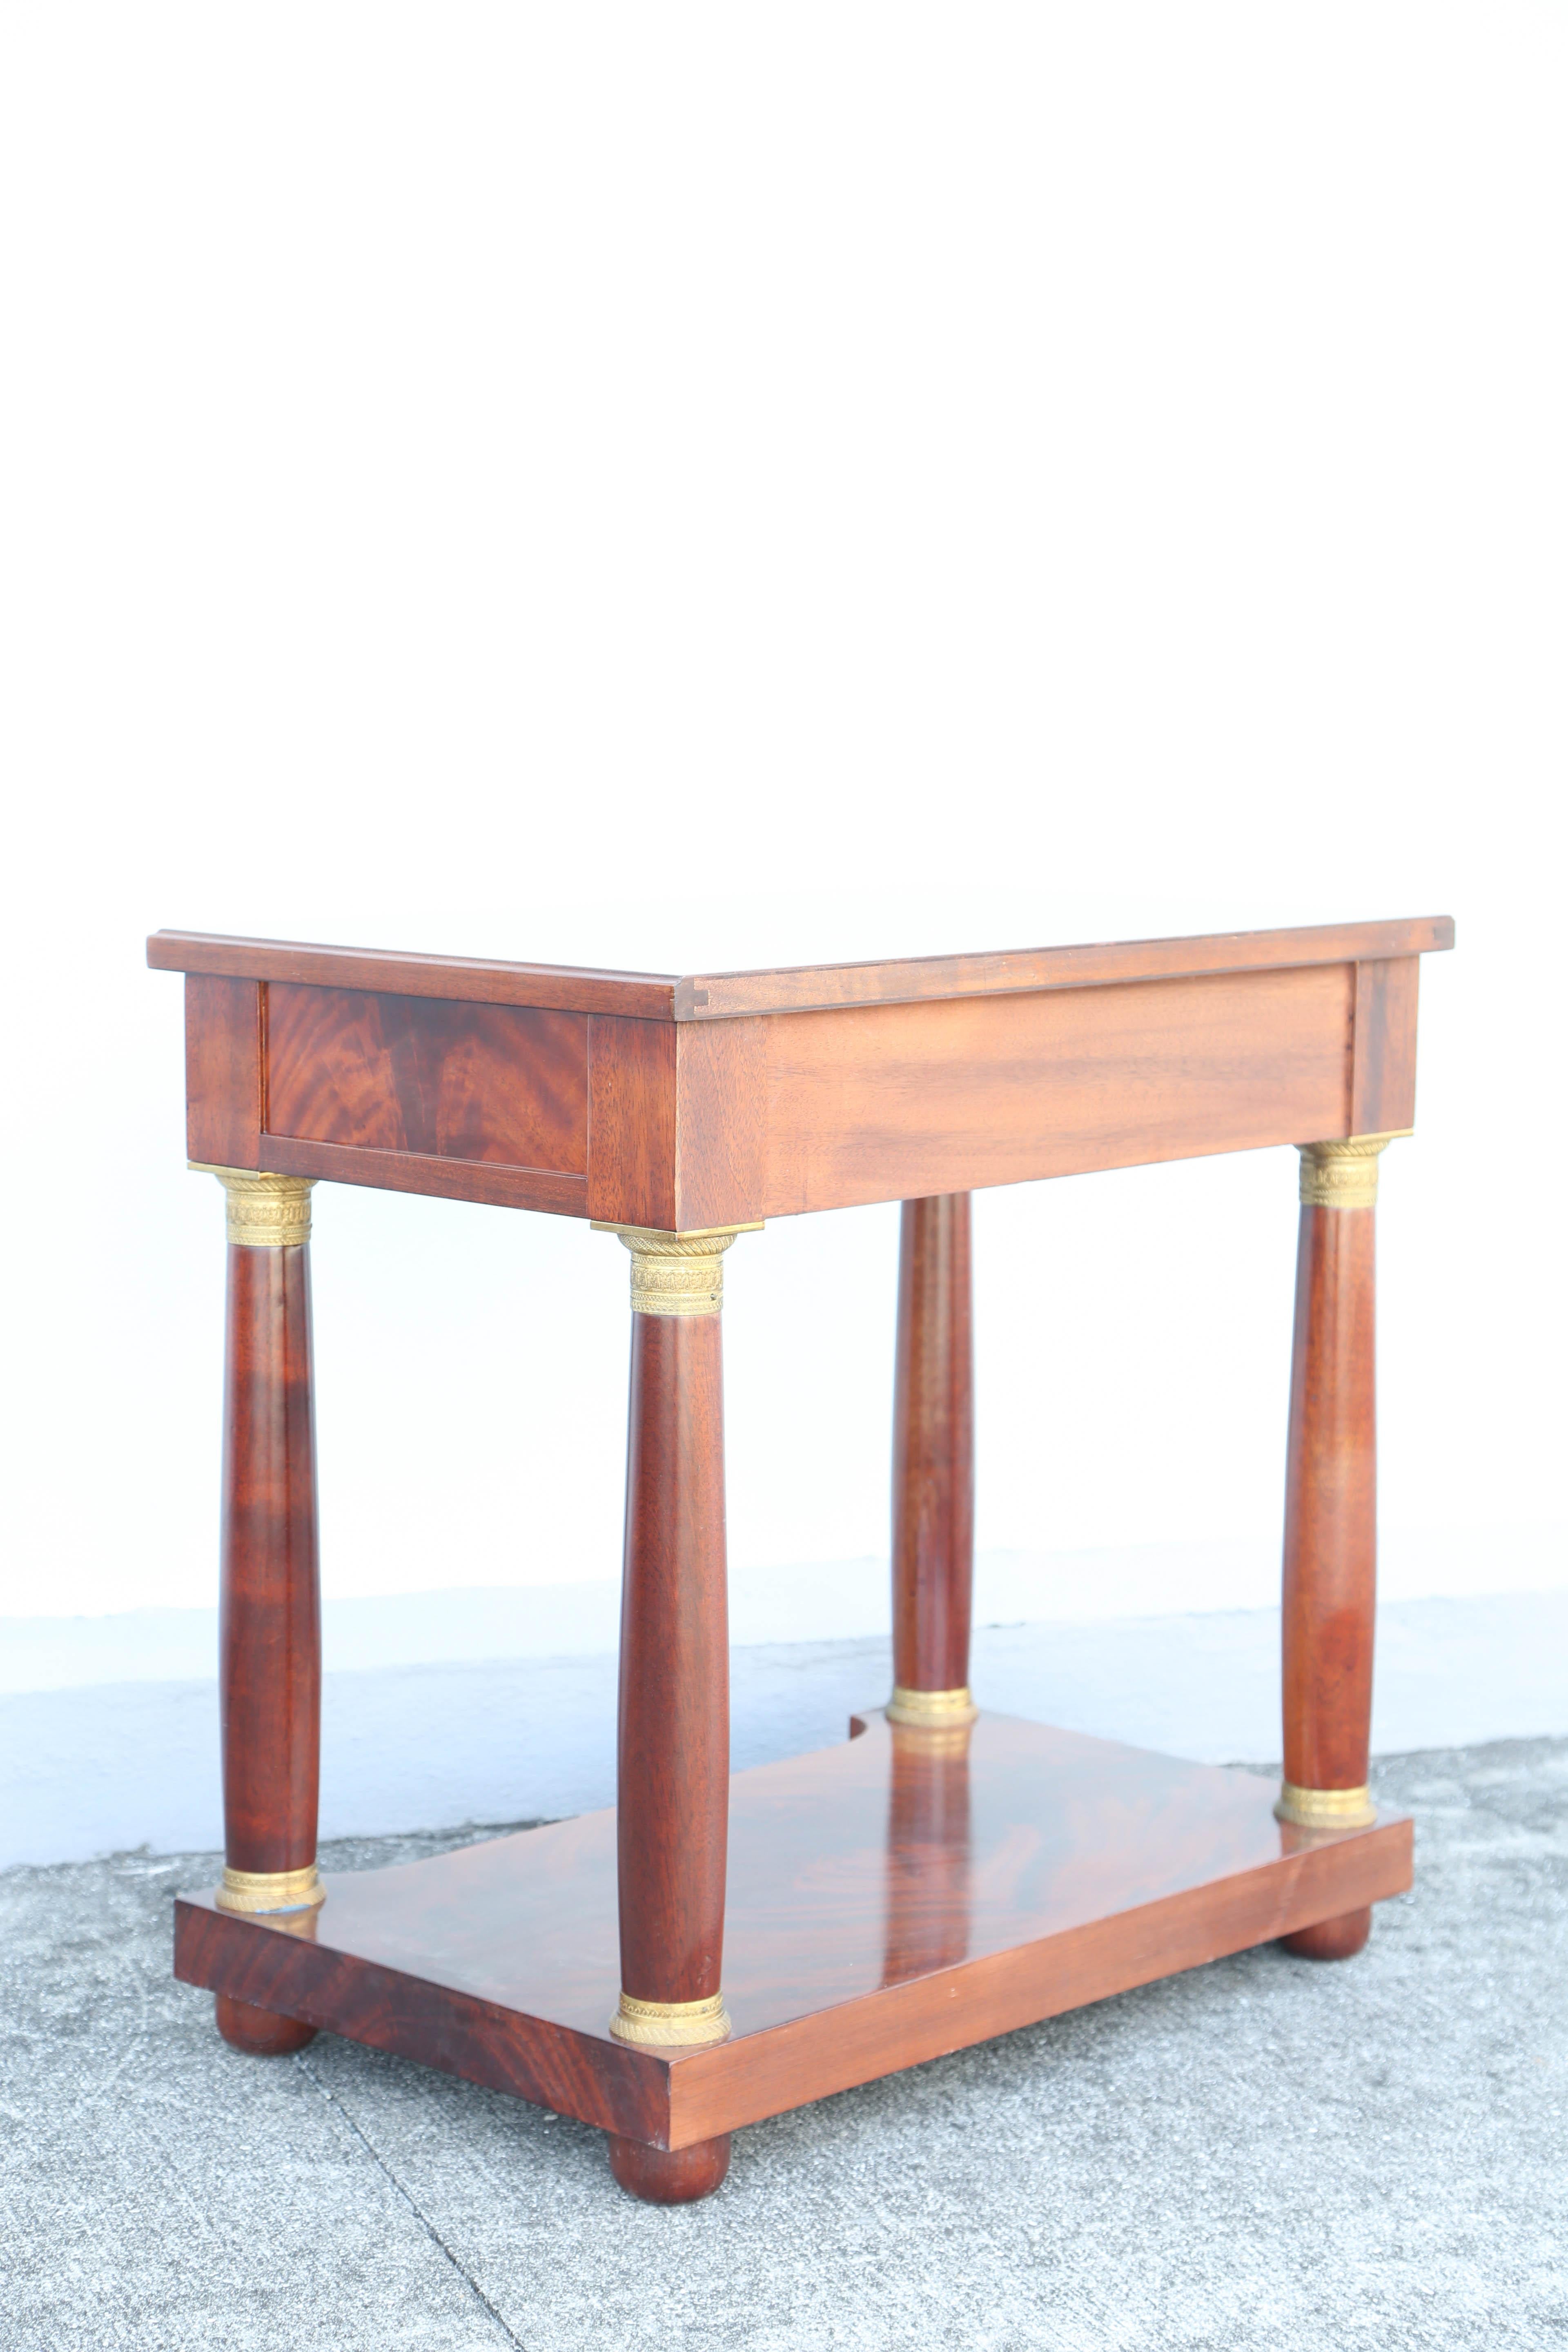 20th Century Biedermeier Style Side Table For Sale